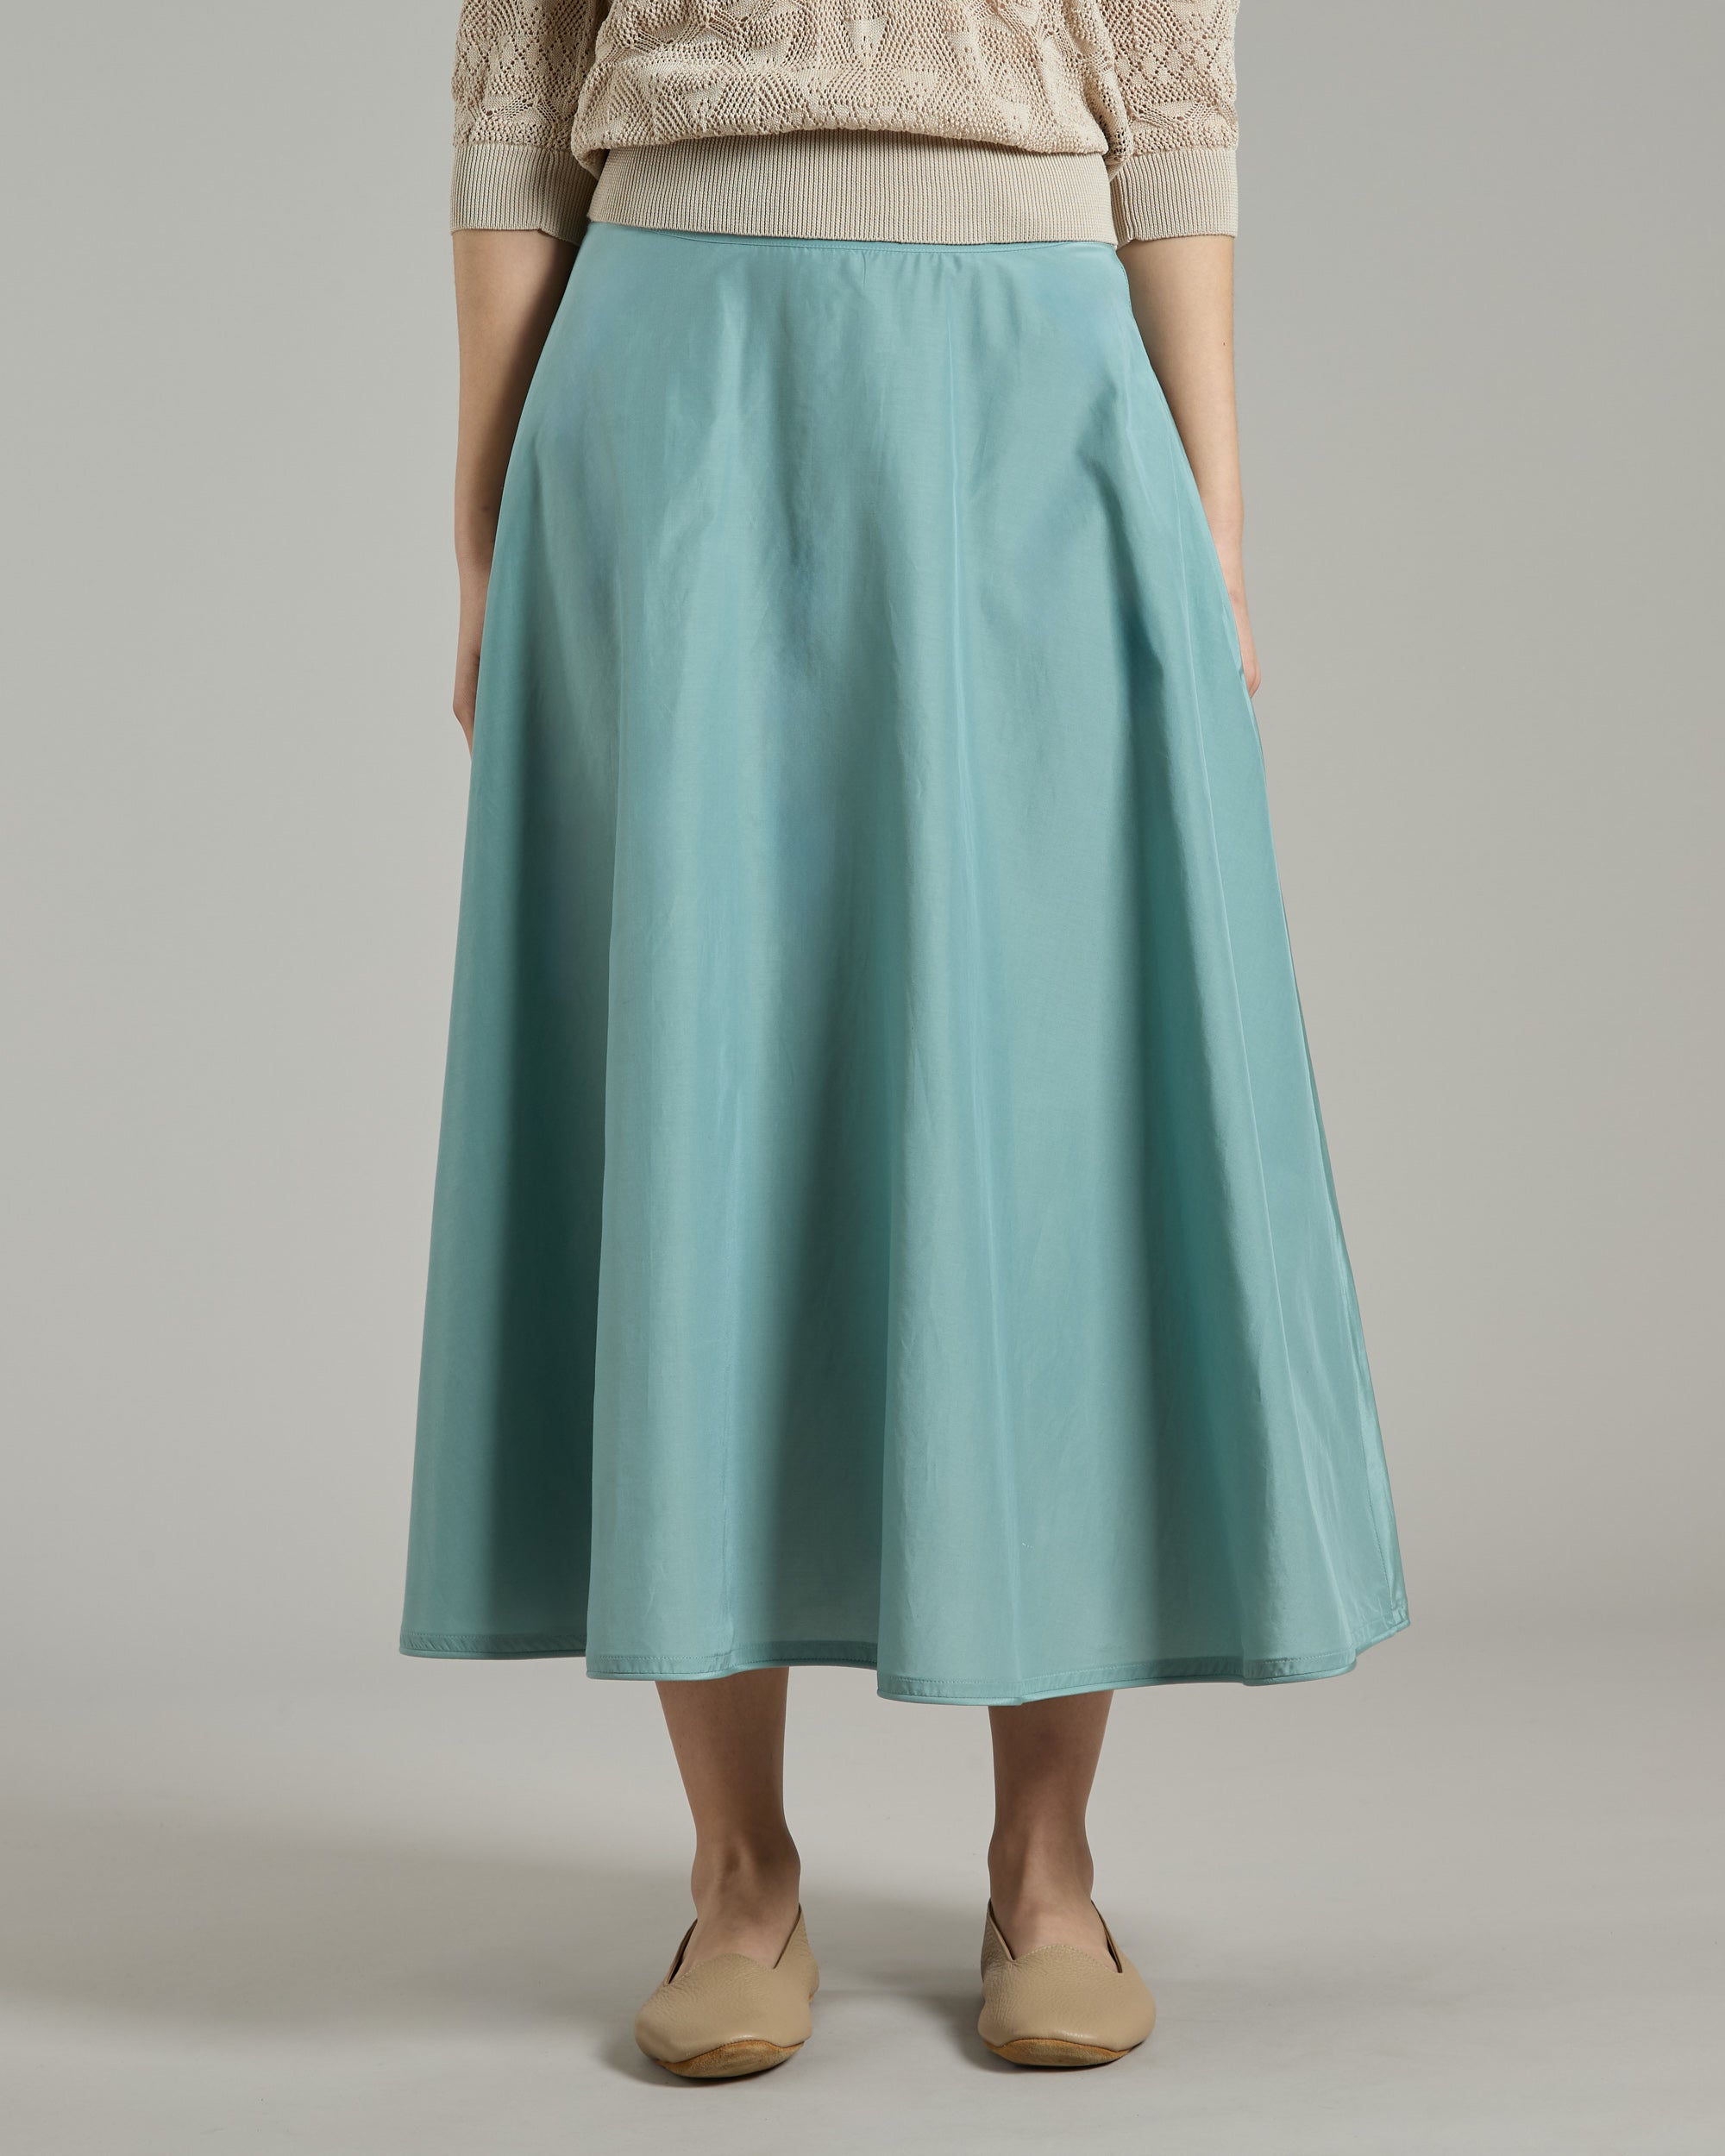 Silk and cotton skirt